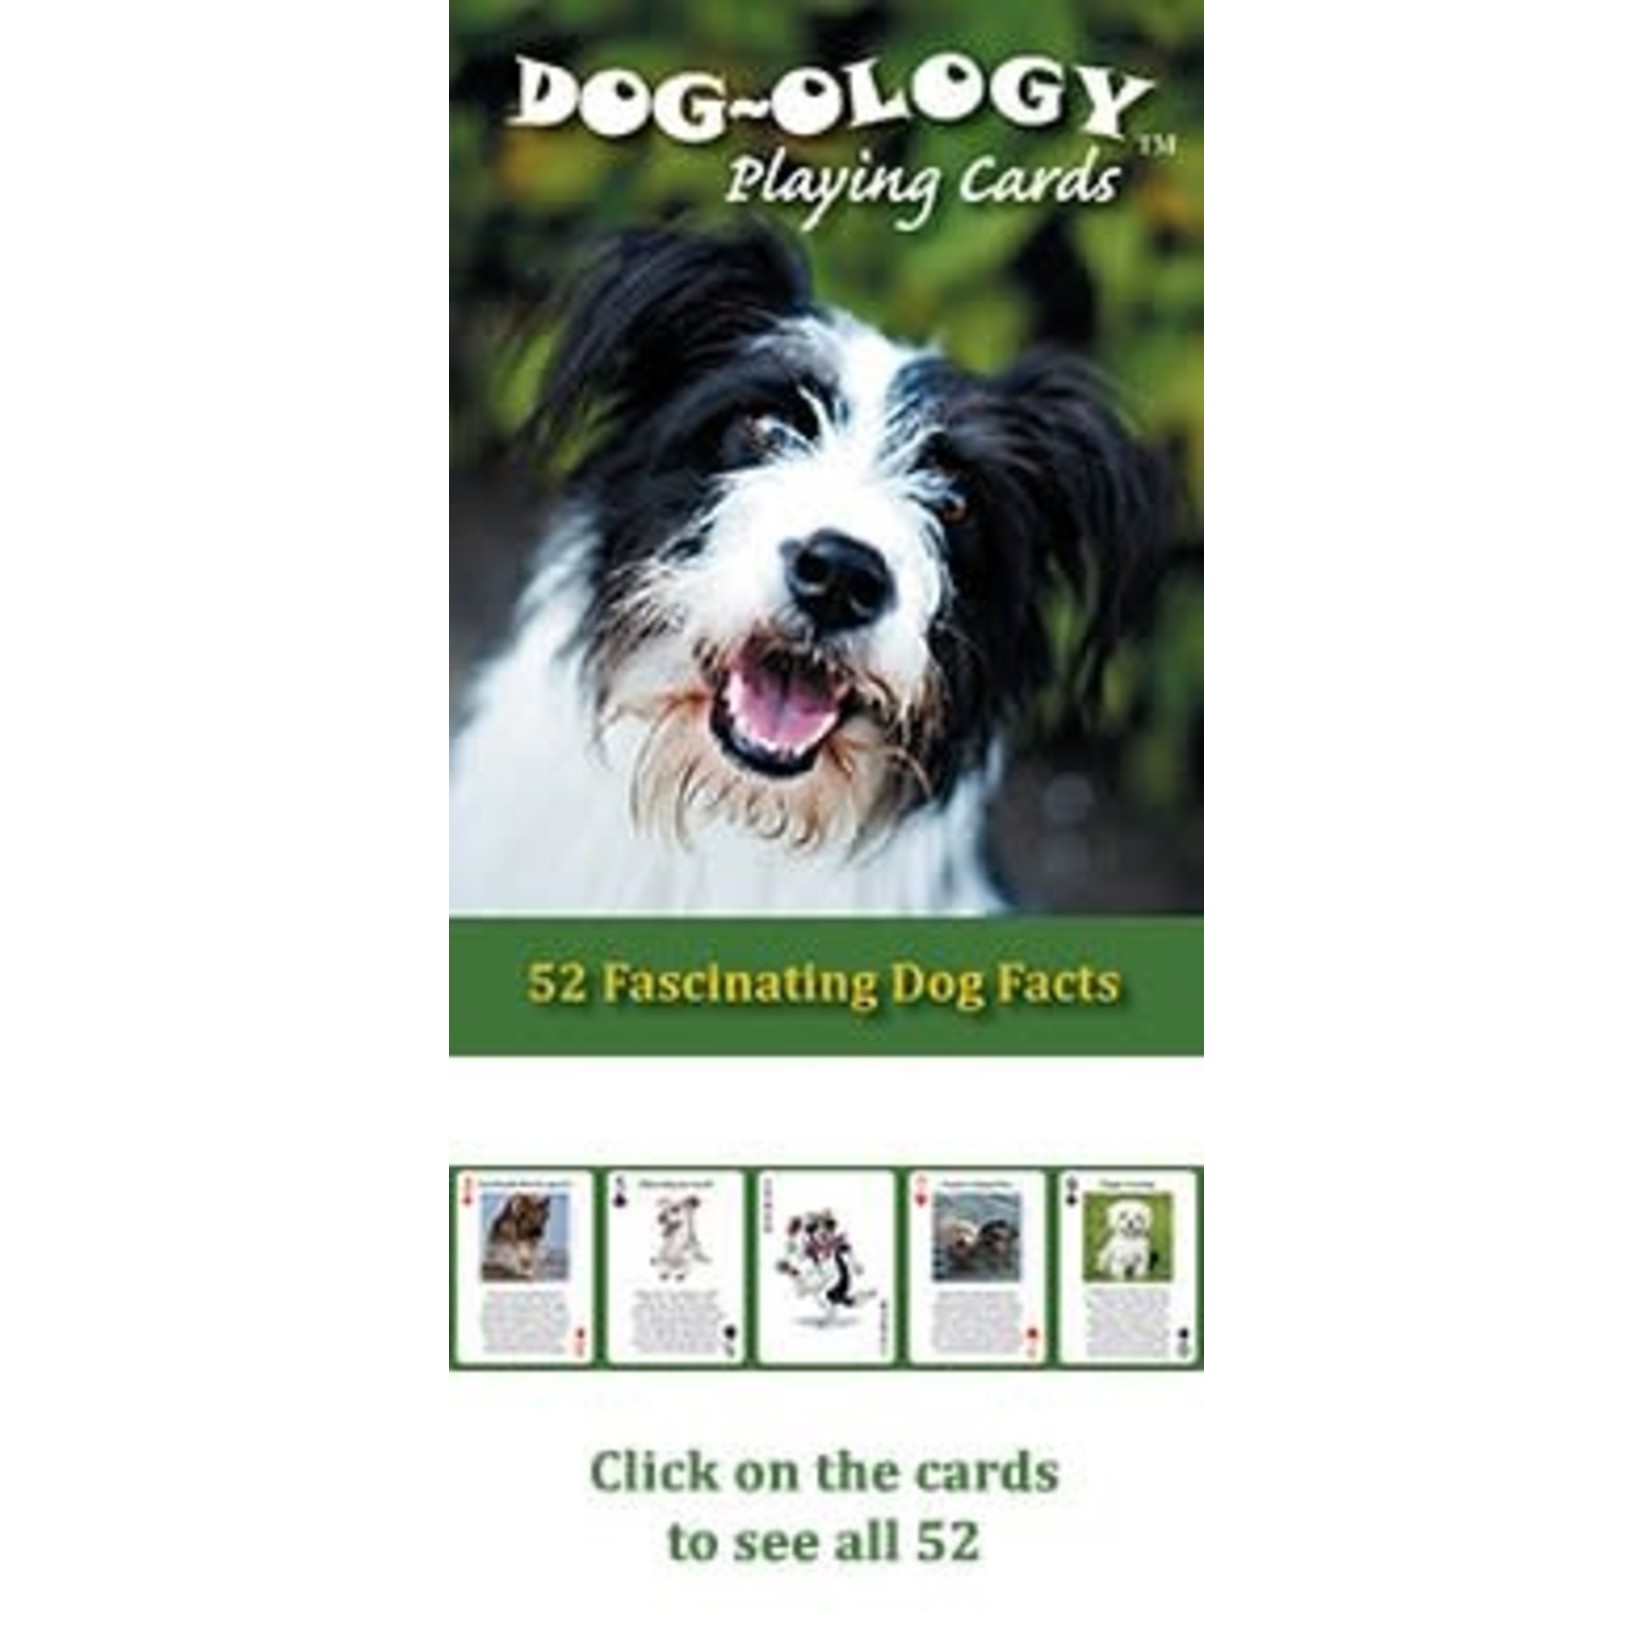 Dogology playing cards